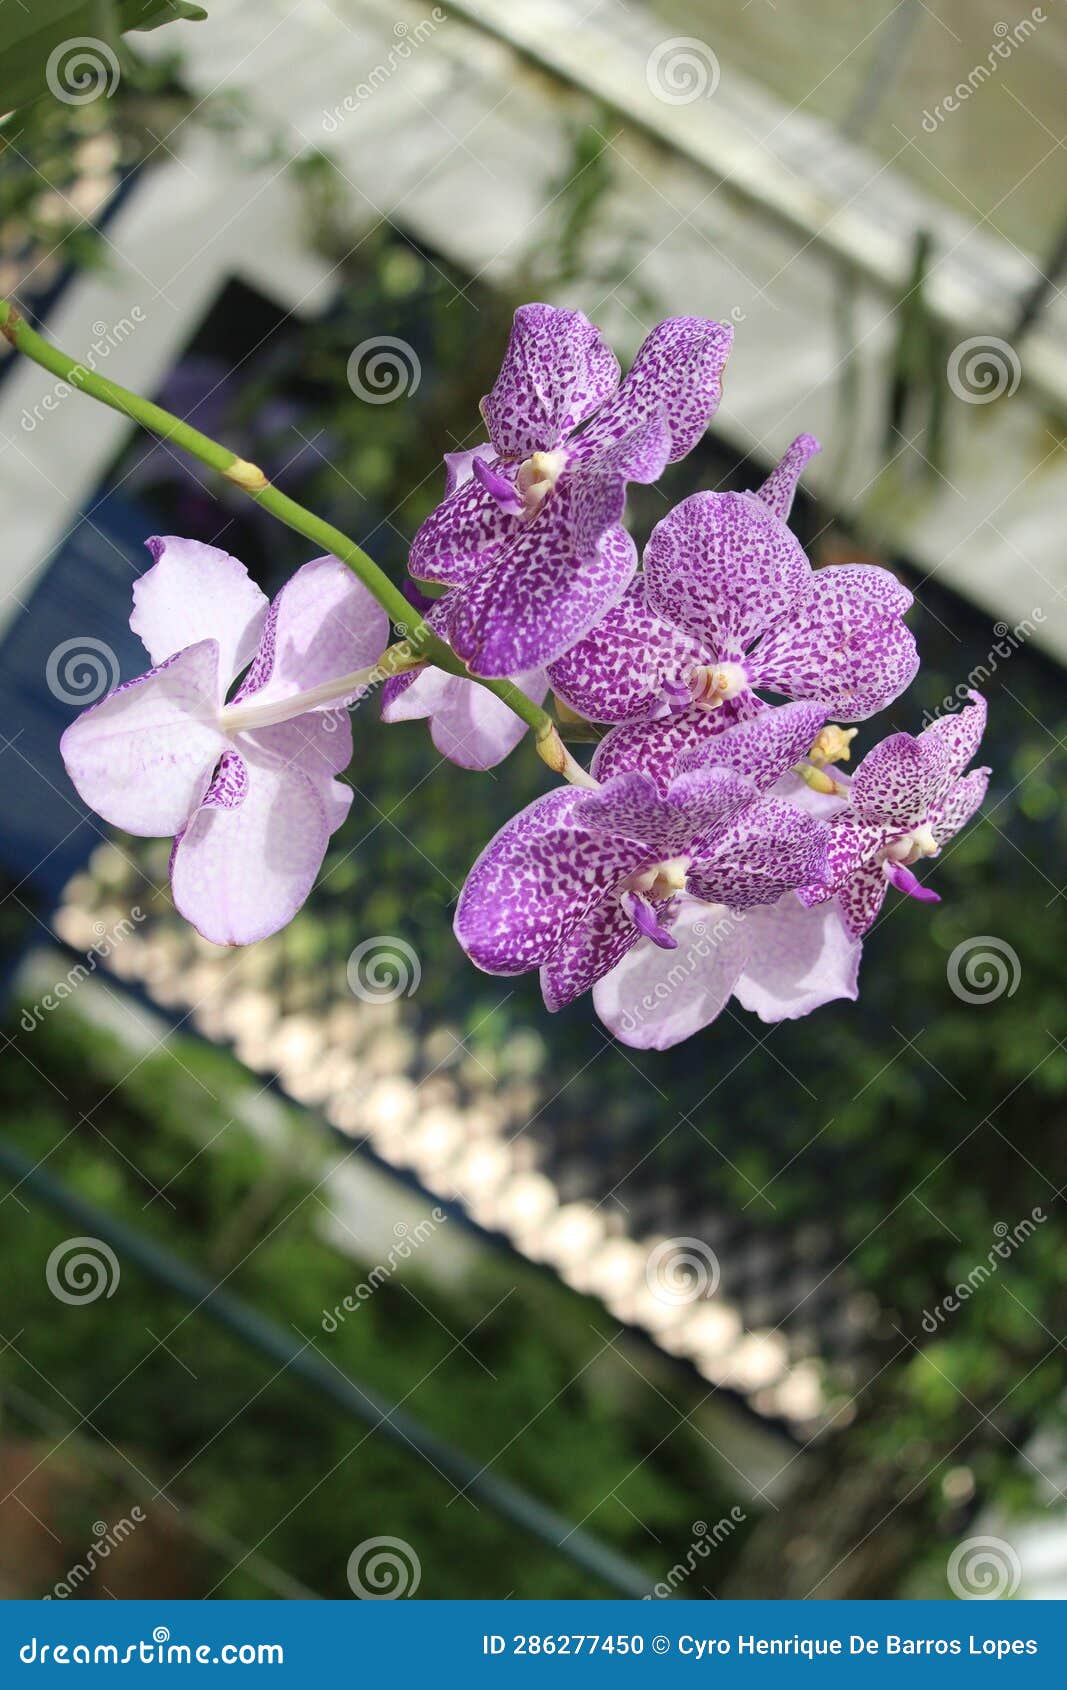 vanda coerulescens details photo, asian species, sky-blue vanda orchid, introduced ornamental species